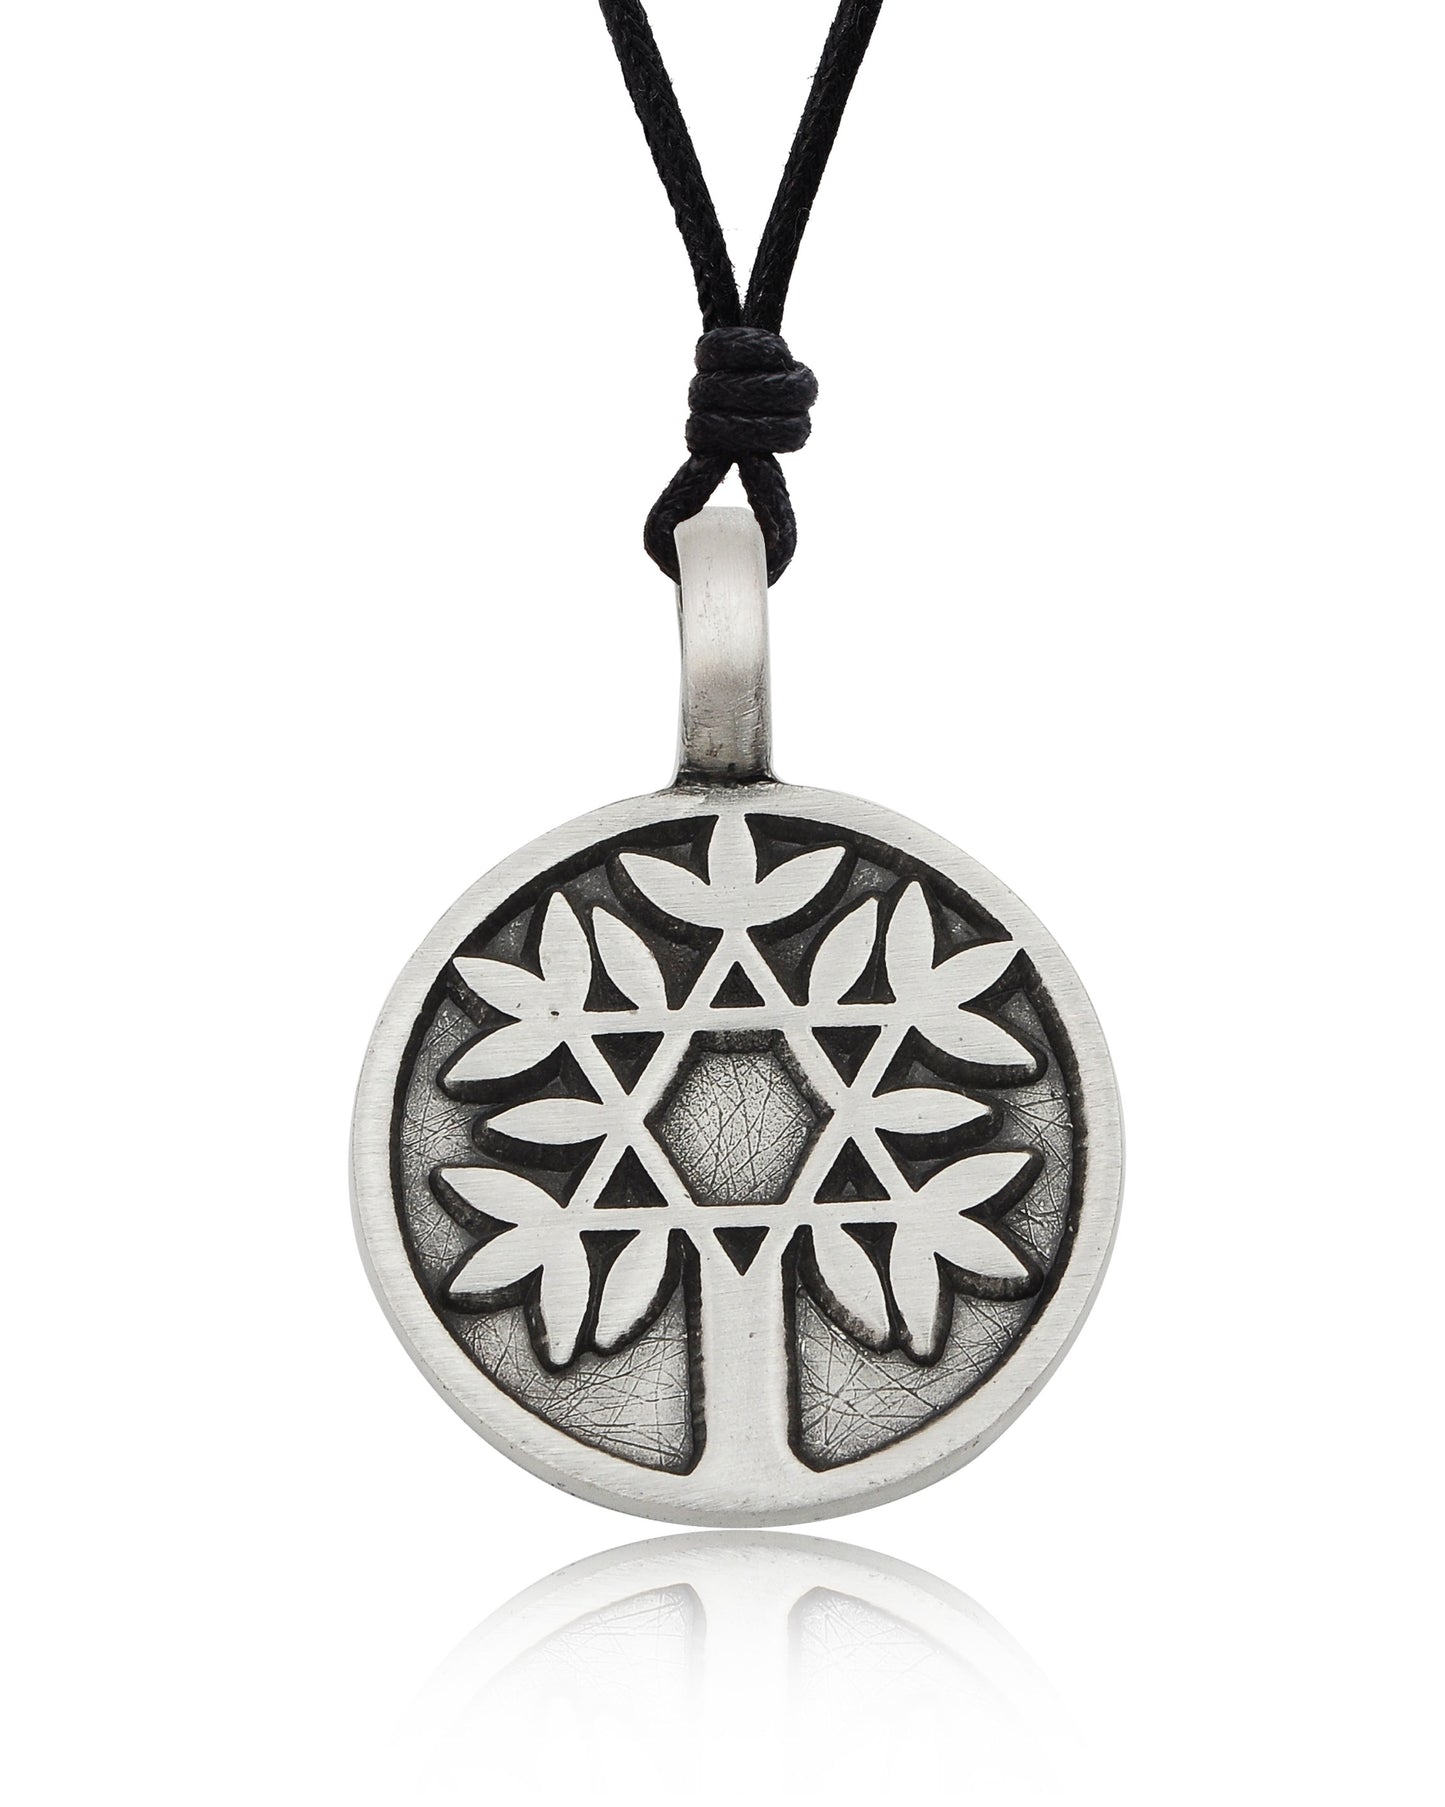 New David Star Peace Jewish Tree Silver Pewter Charm Necklace Pendant Jewelry